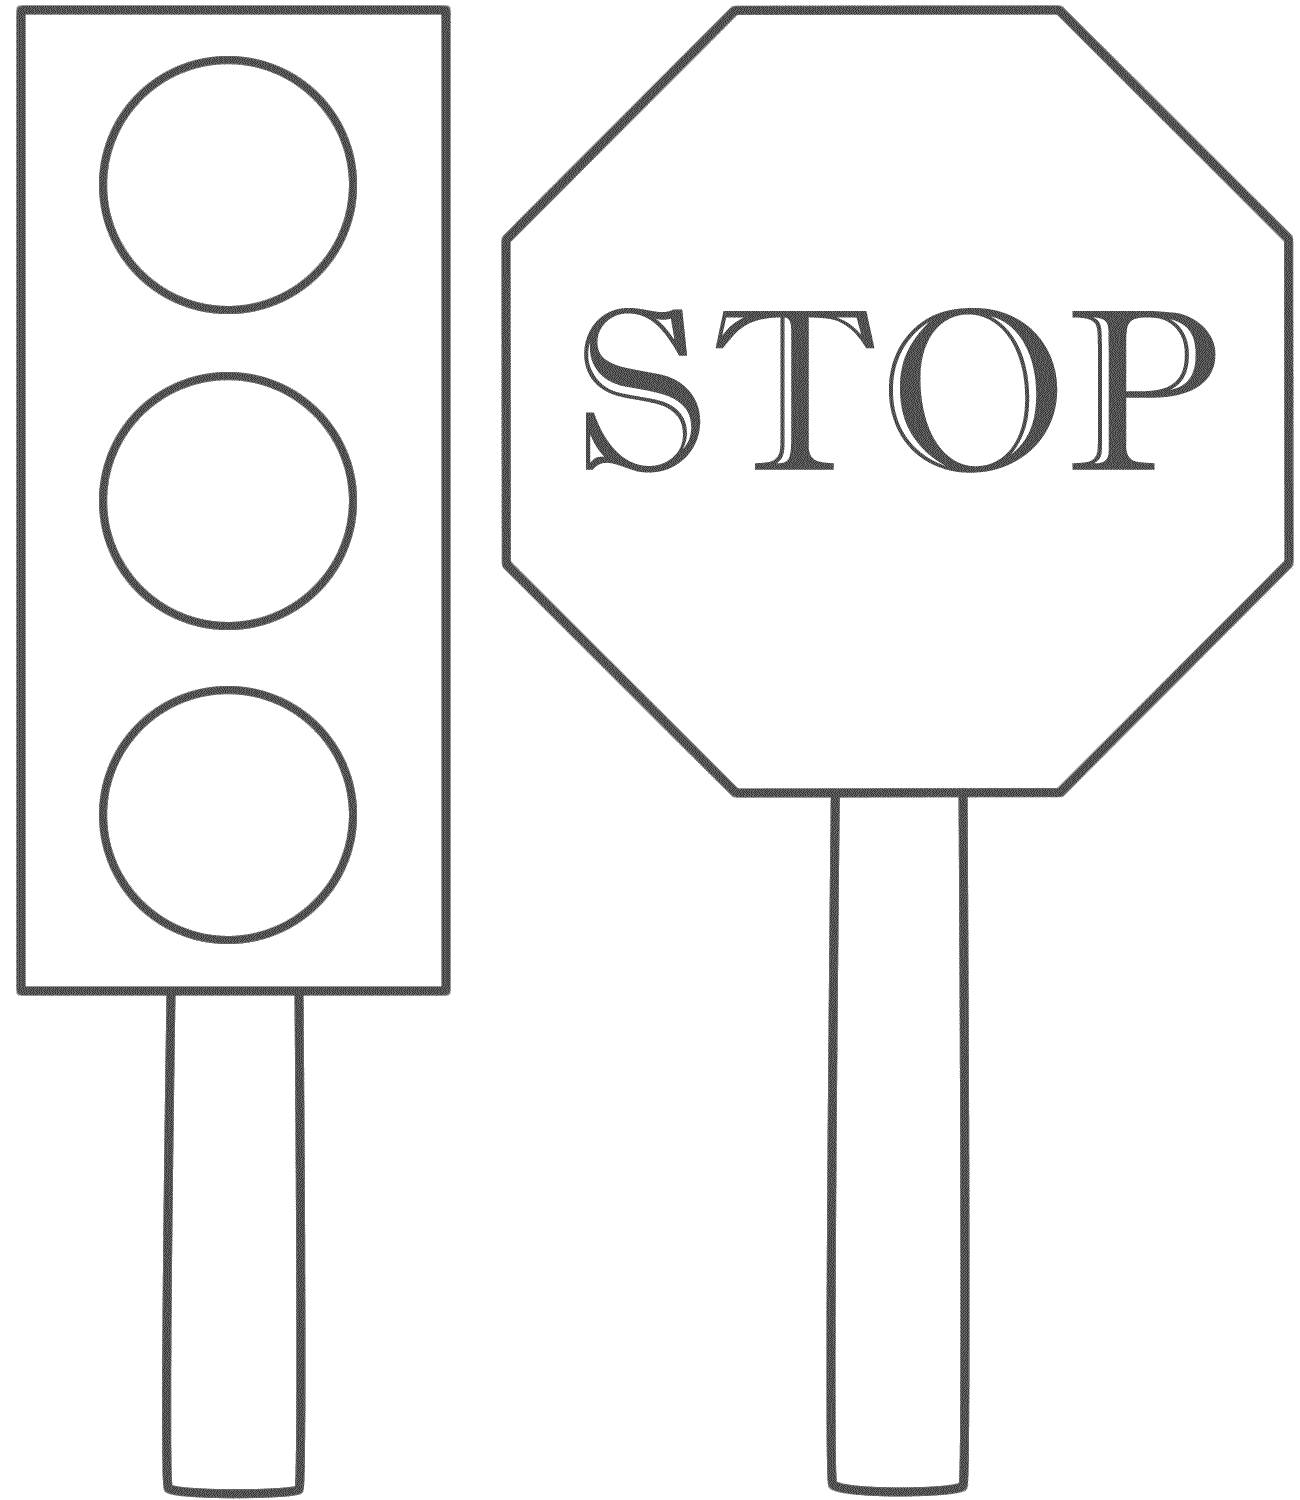 Stop traffic light